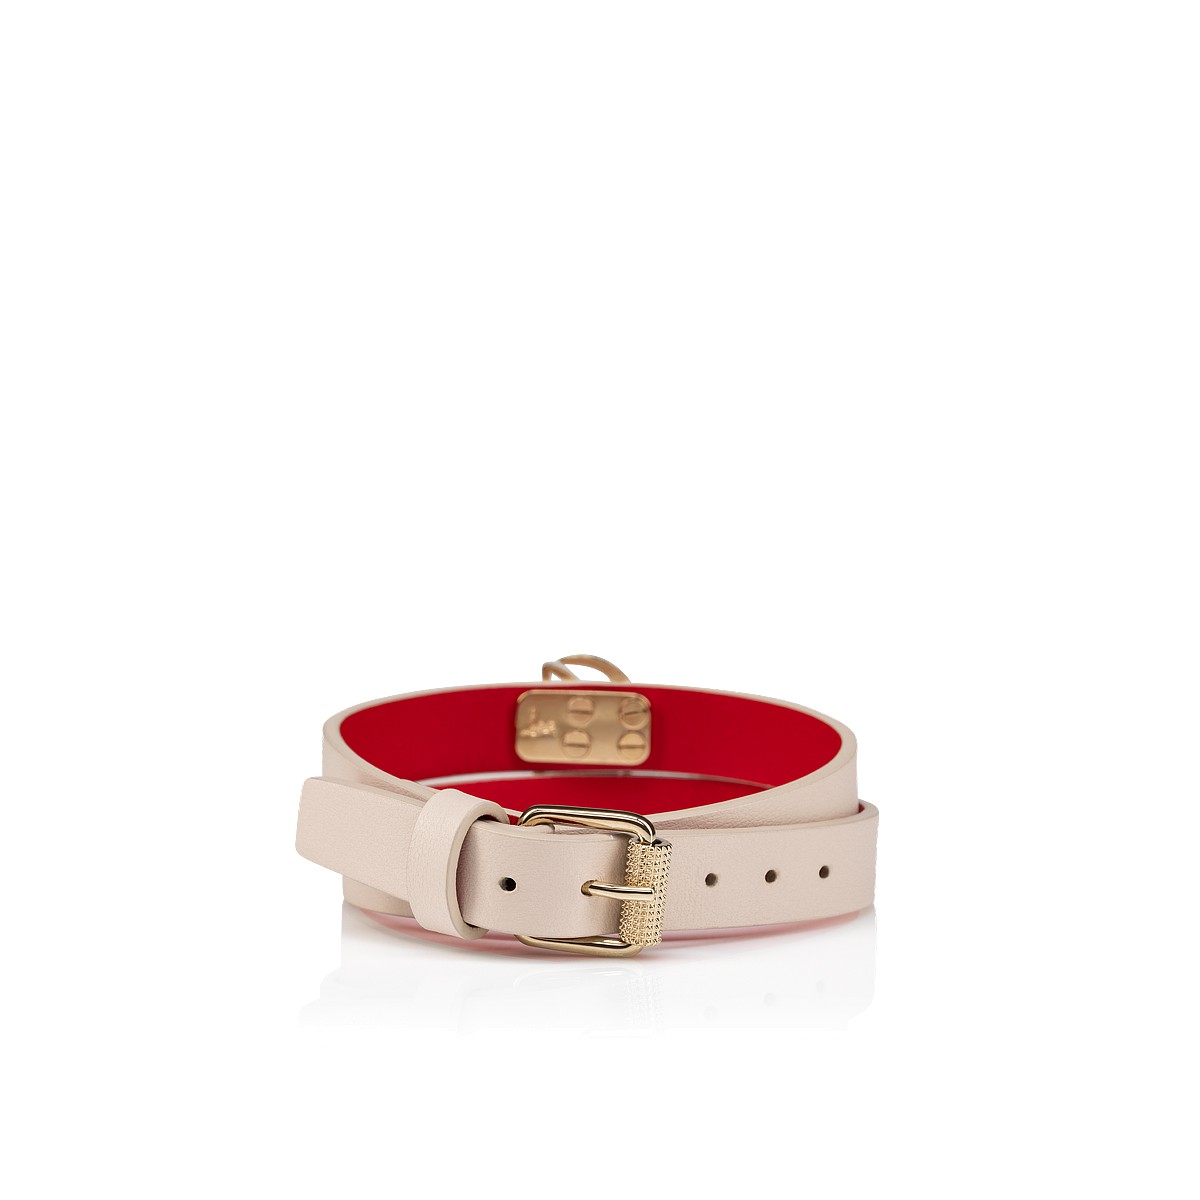 Small Leather Goods - Cl Logo Bracelet - Christian Louboutin